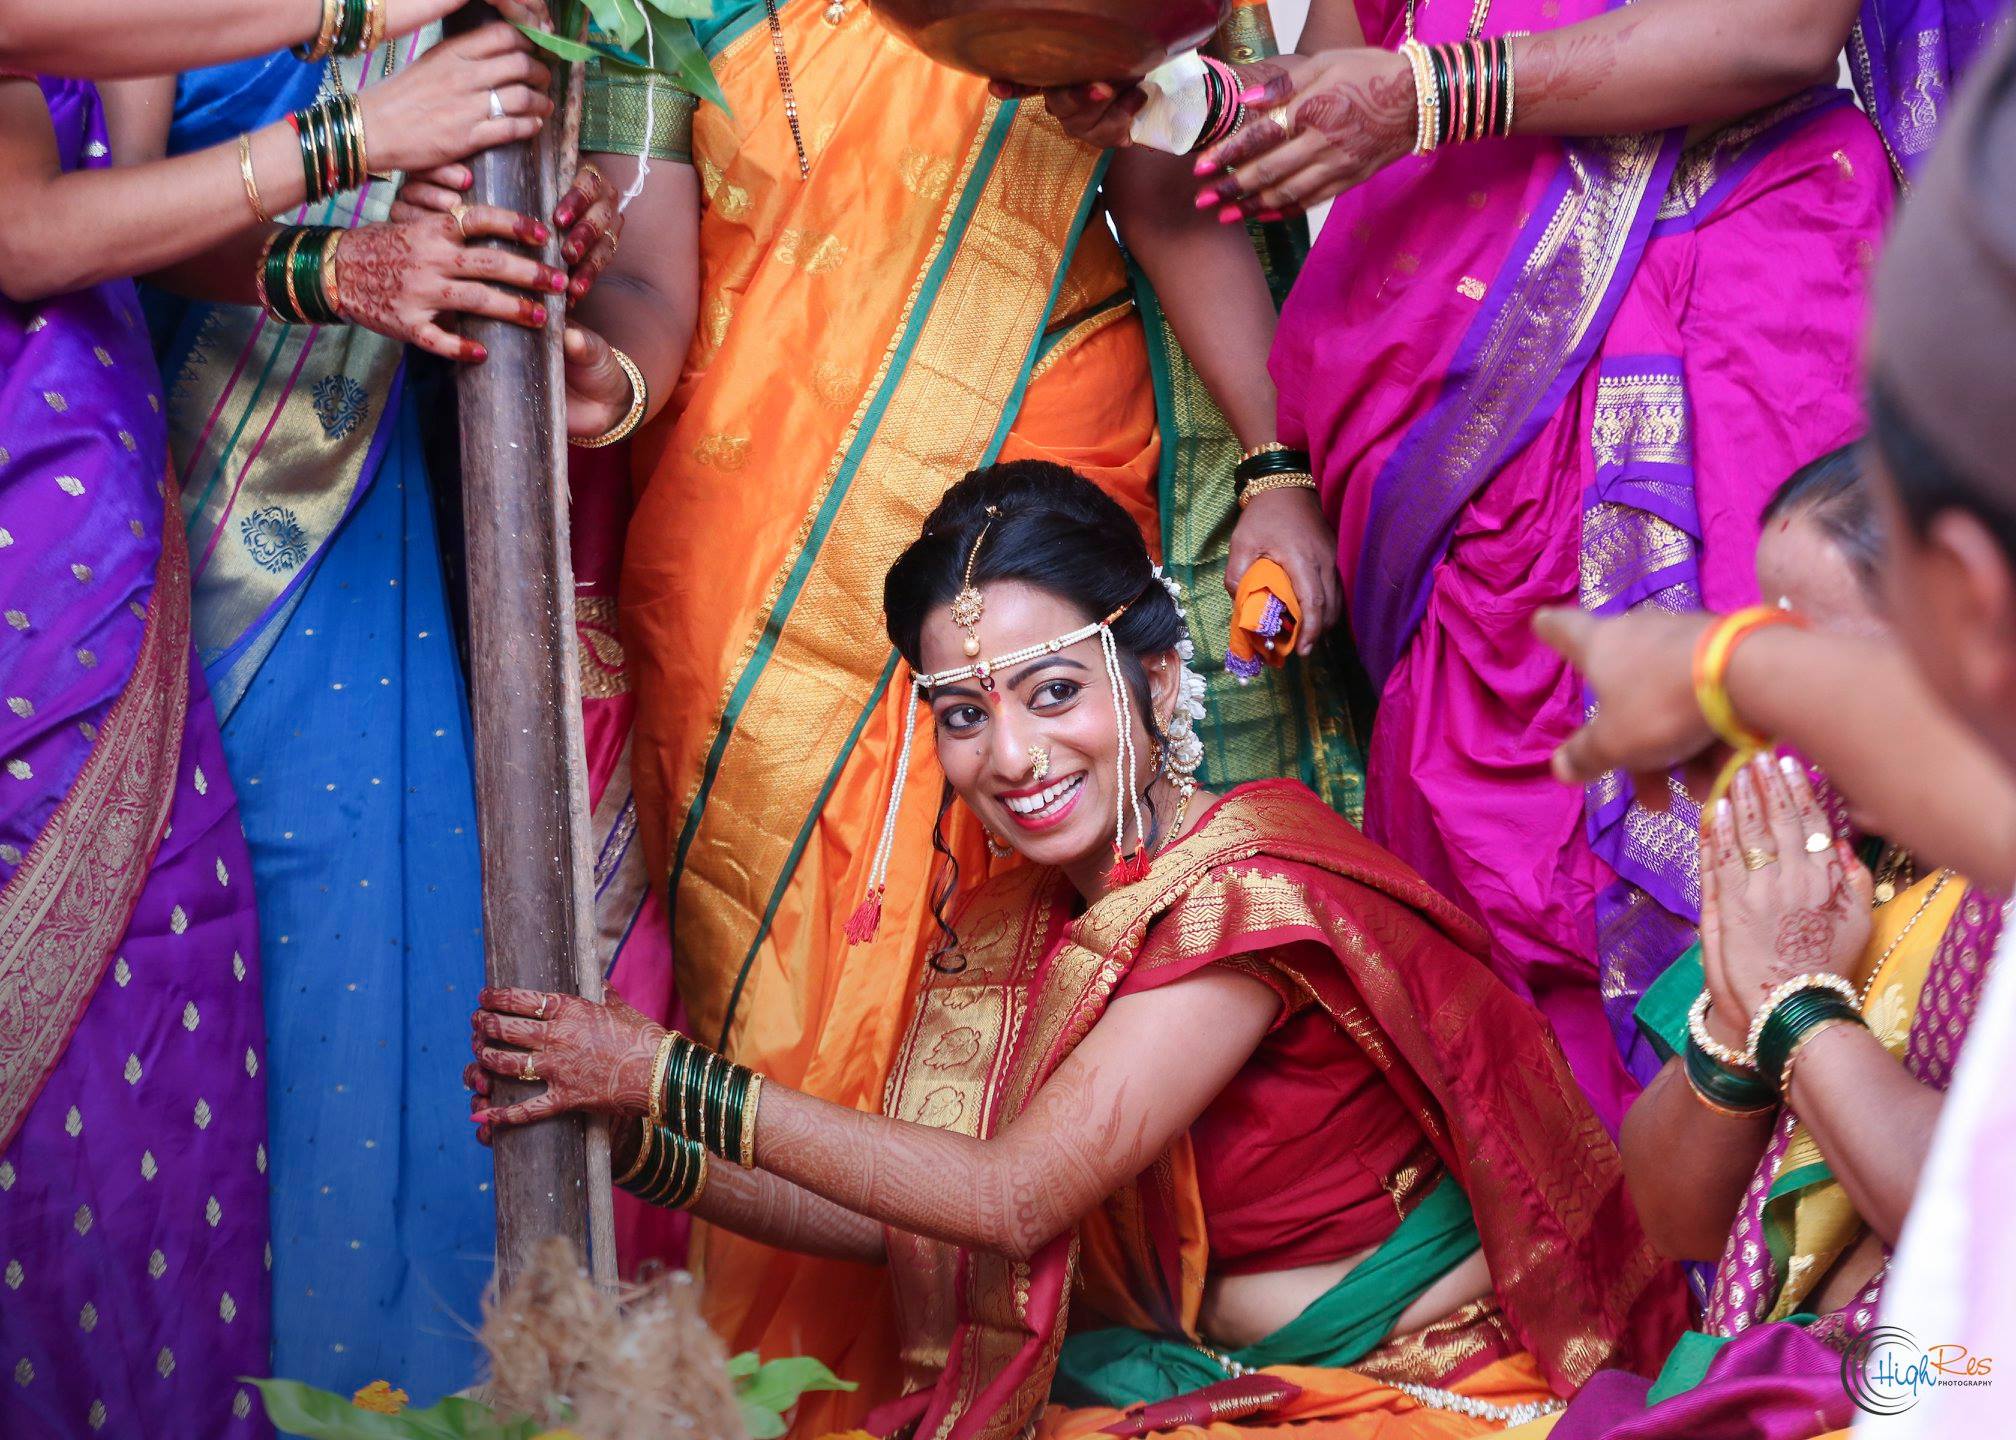 HighRes  Studio Wedding Photographer, Mumbai